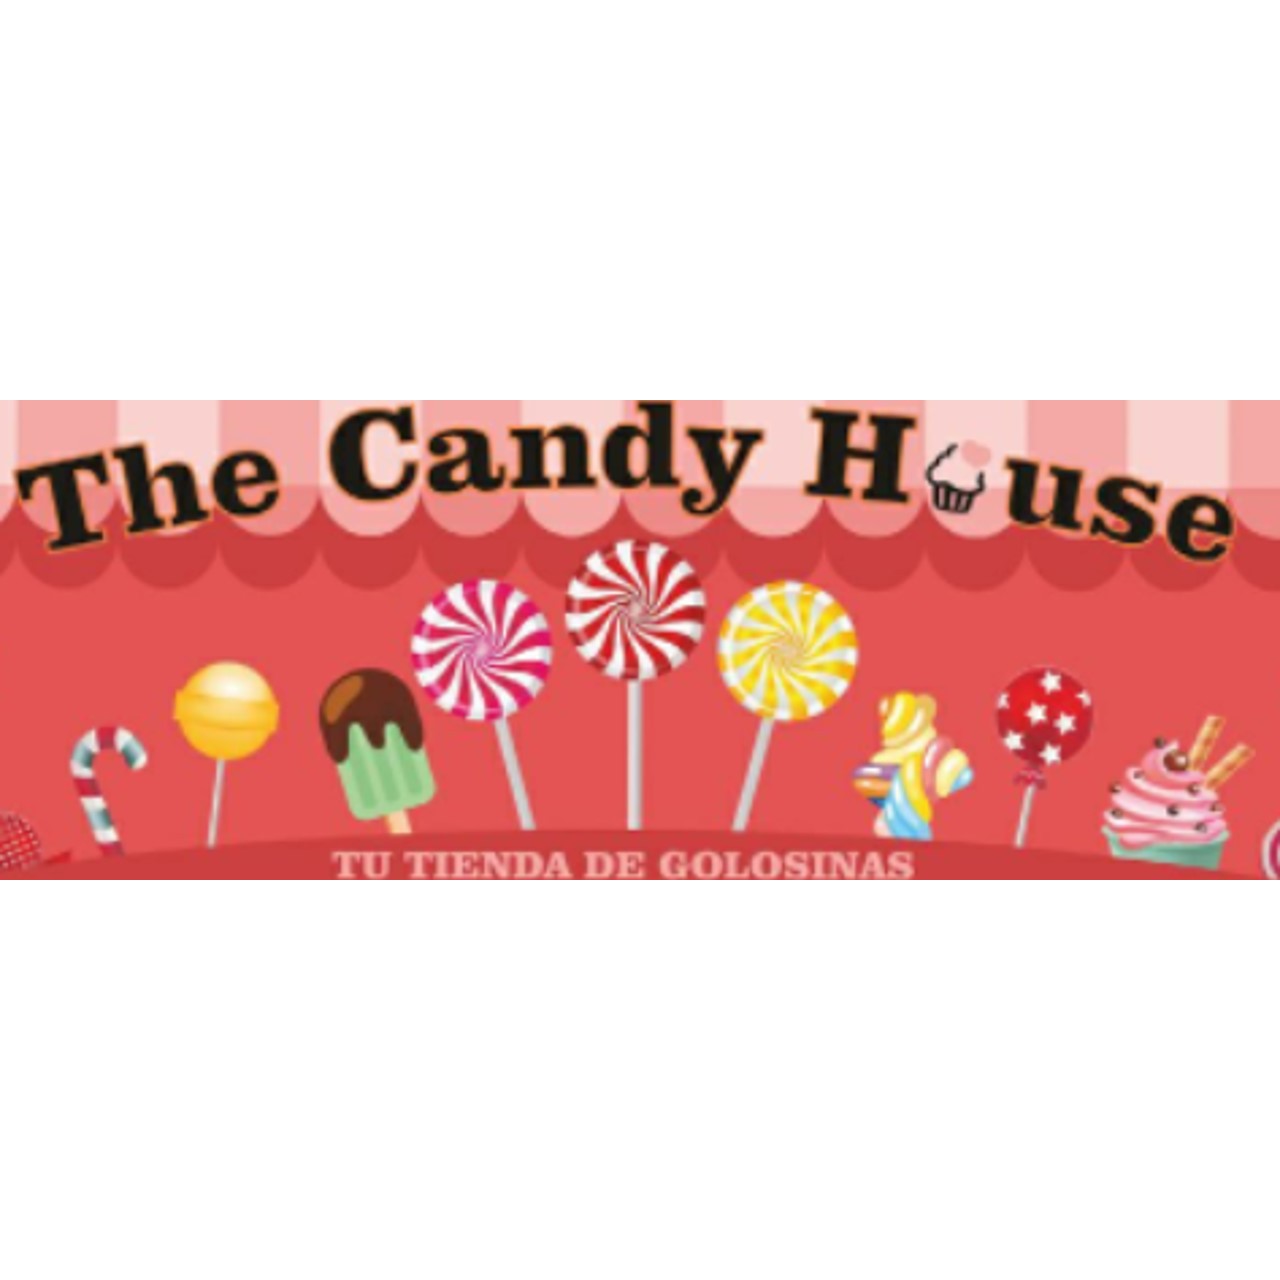 The Candy House Badajoz